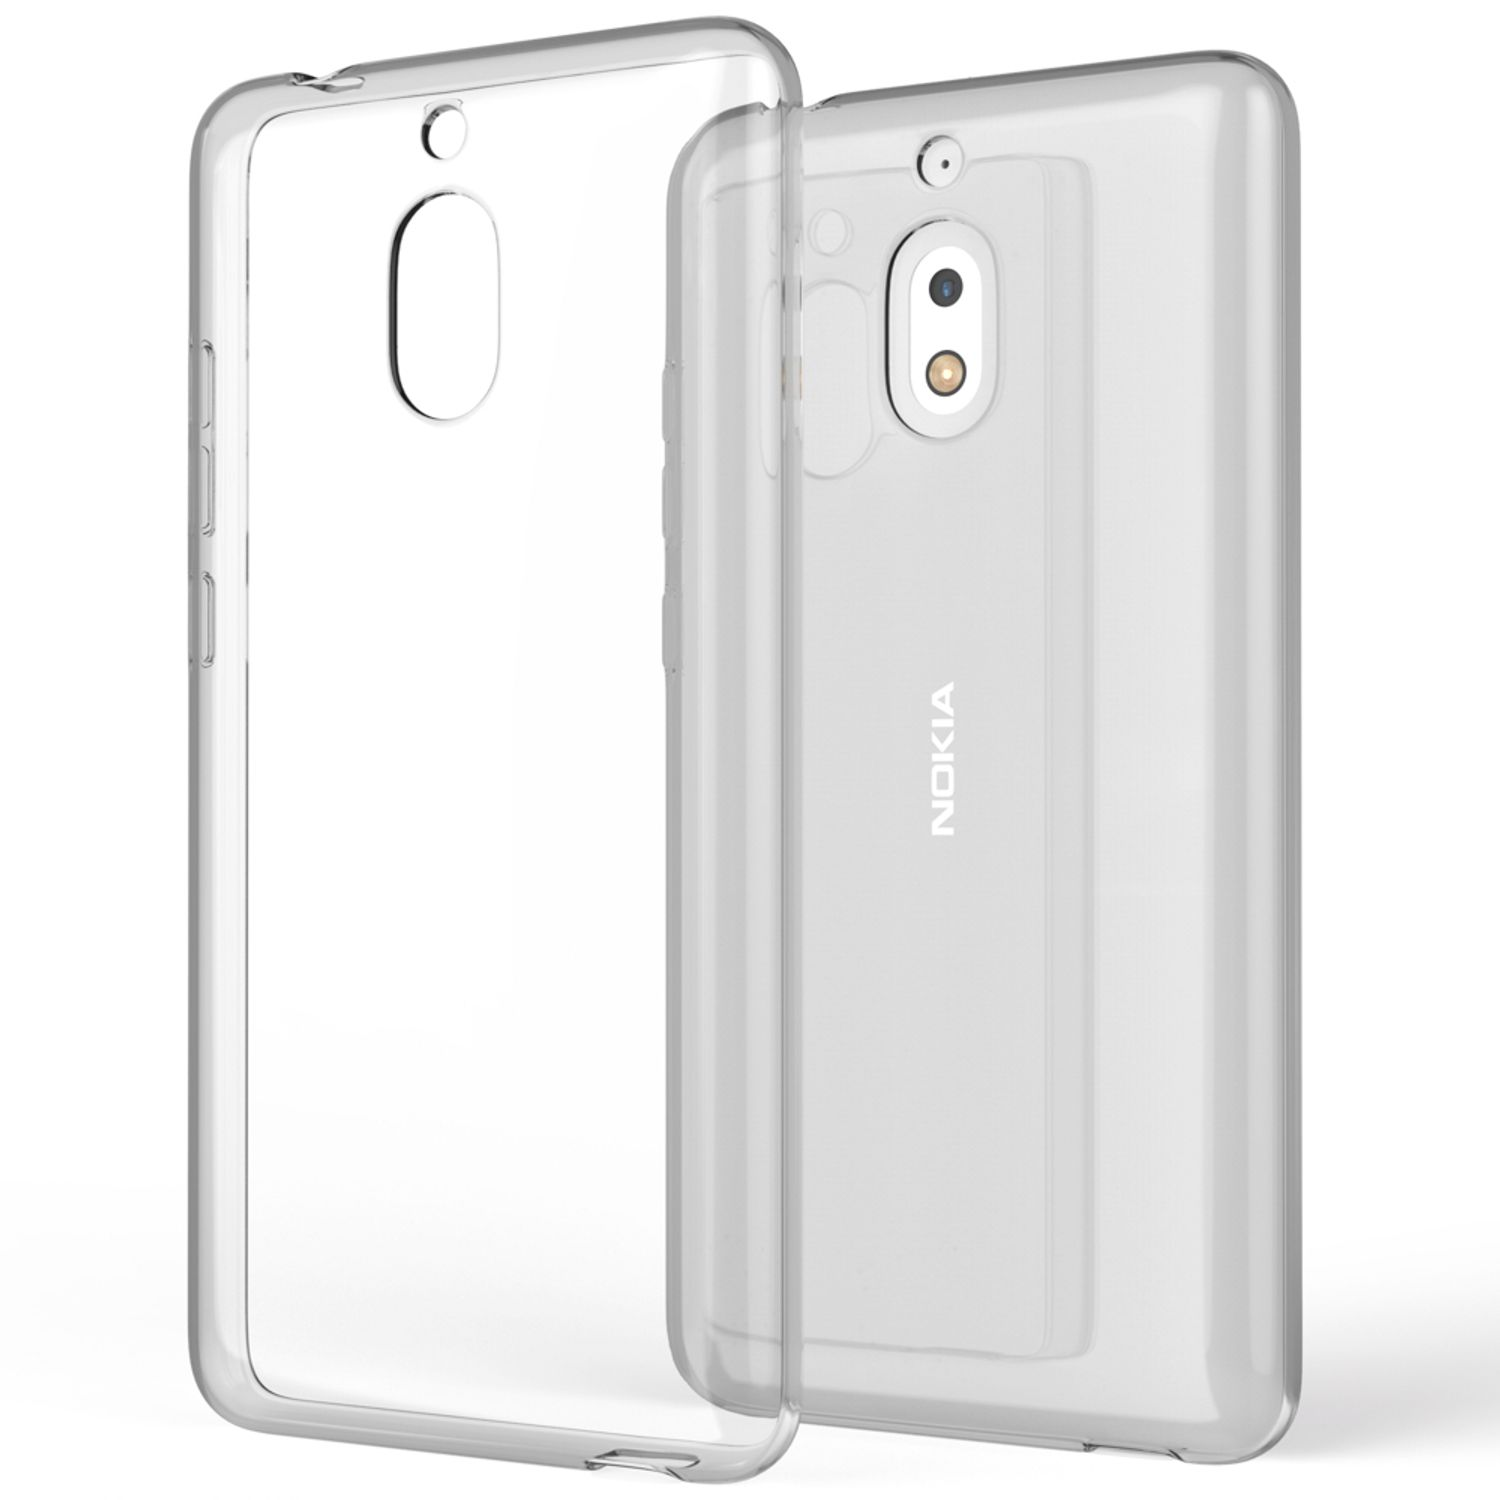 2.1 Backcover, NALIA Klar Nokia, Transparent (2018), Transparente Hülle, Silikon